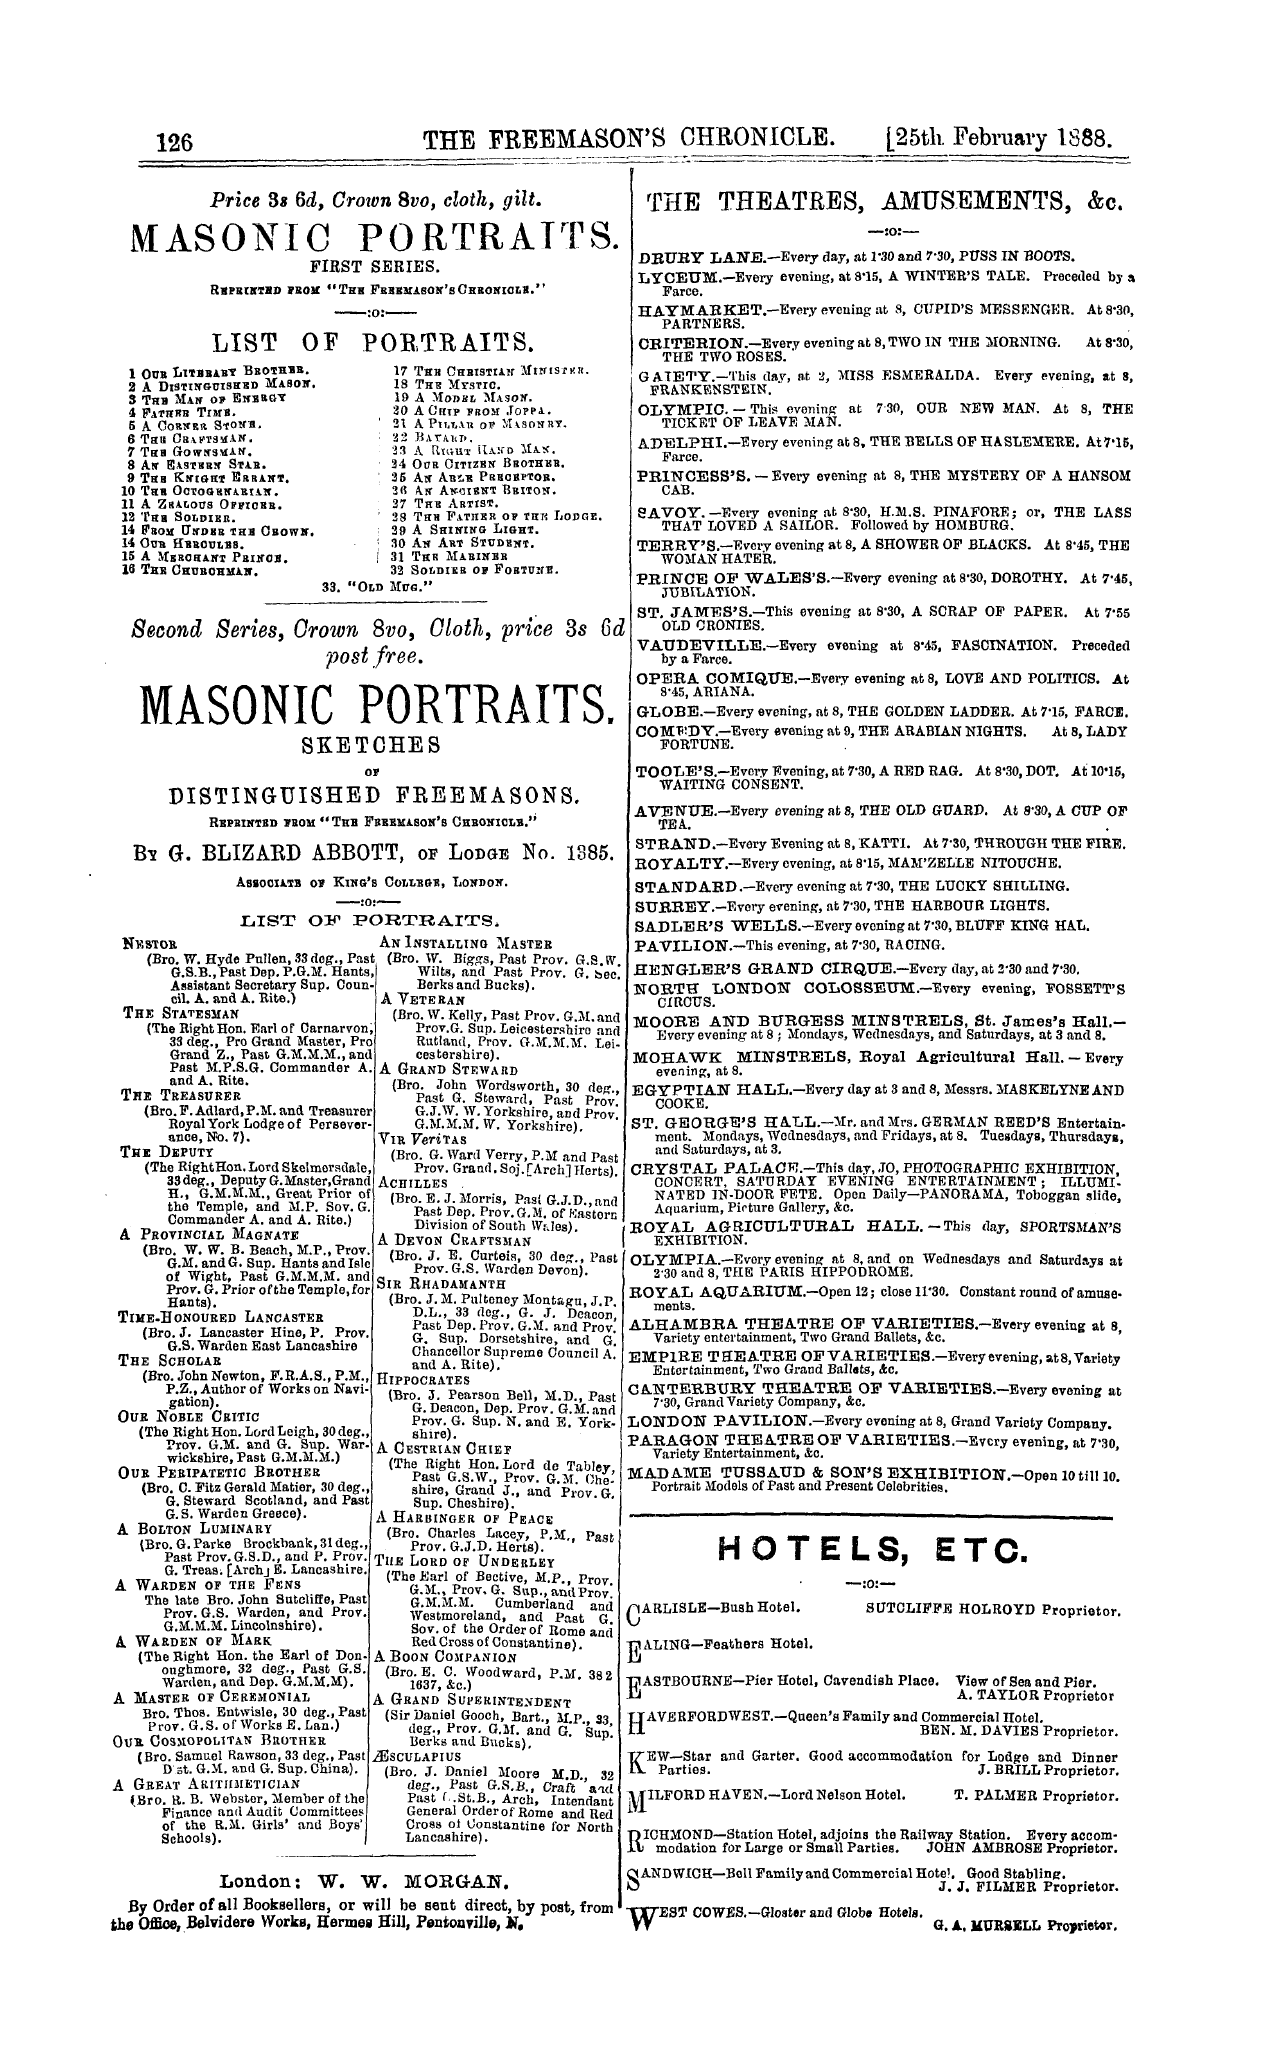 The Freemason's Chronicle: 1888-02-25 - Ad01402